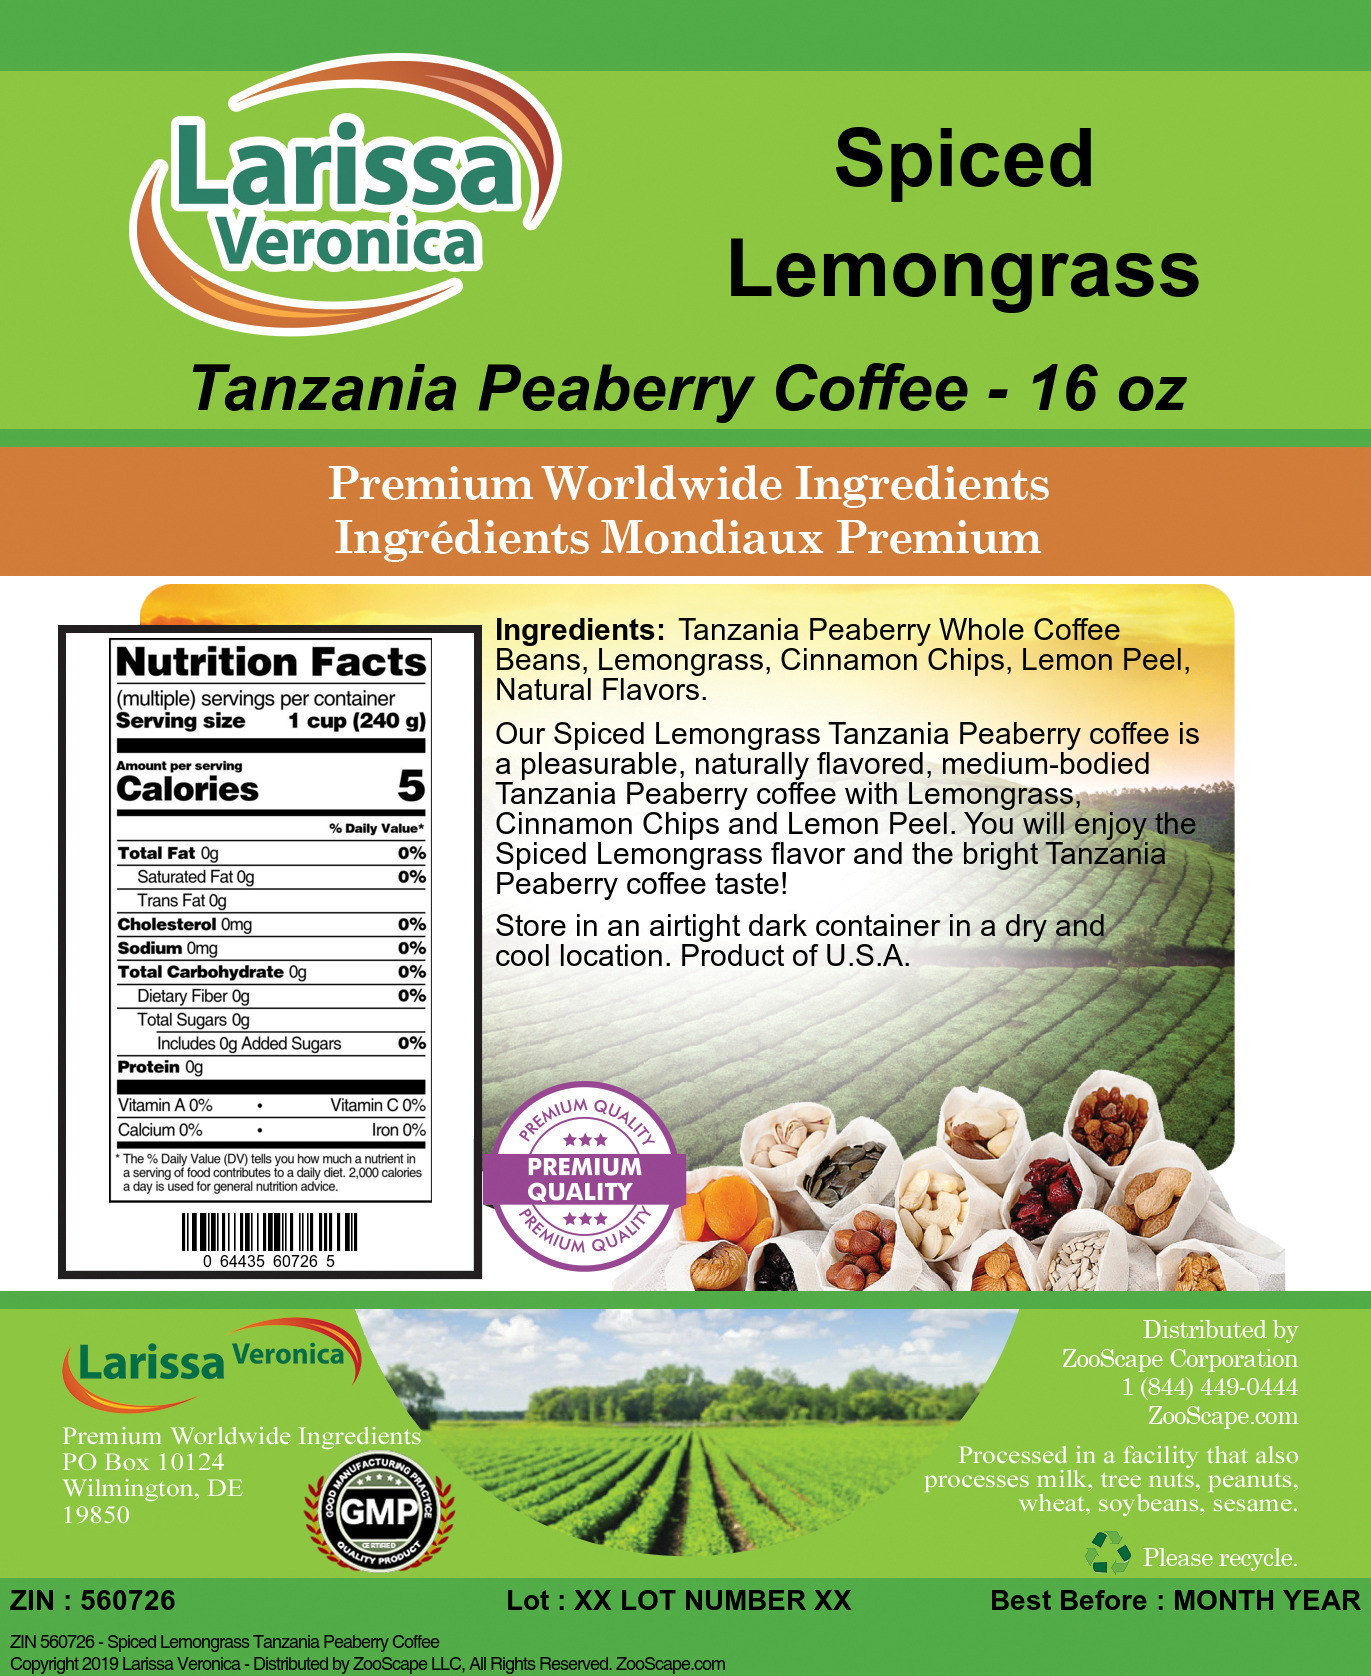 Spiced Lemongrass Tanzania Peaberry Coffee - Label